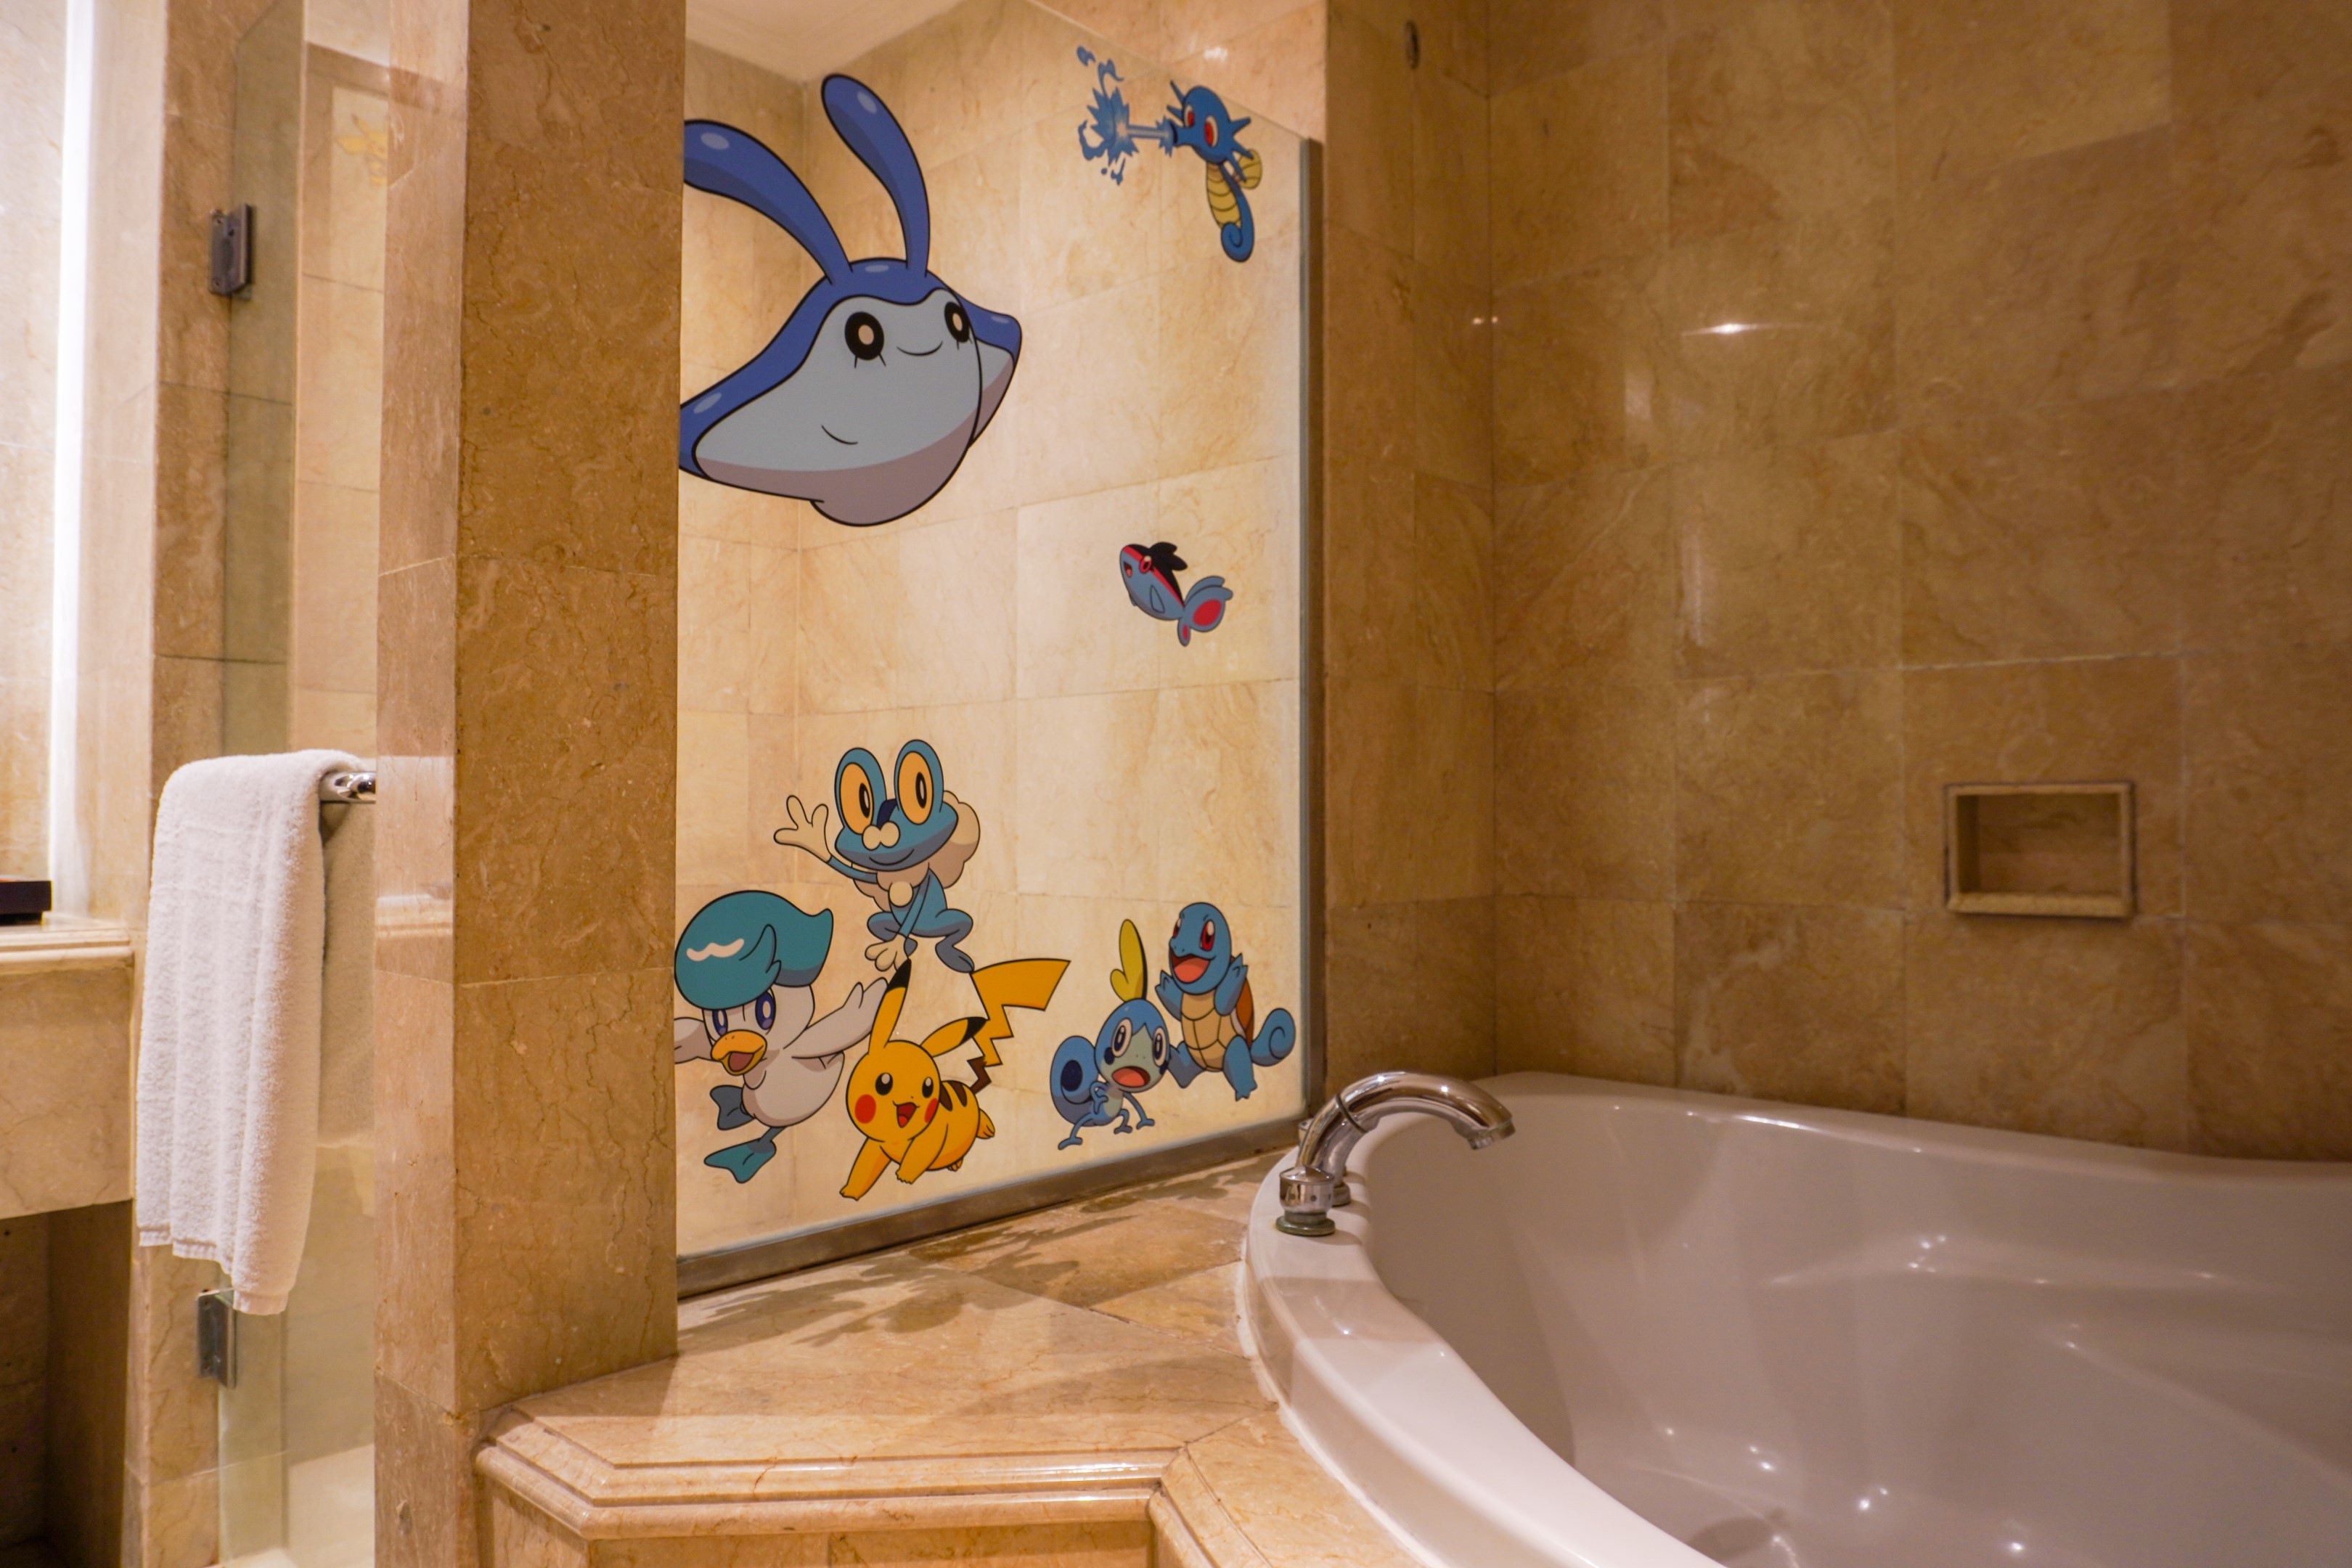 nikko bali benoa beach pokémon, Hotel Nikko Bali Benoa Beach unveils Pokémon Room featuring the Iconic Pikachu